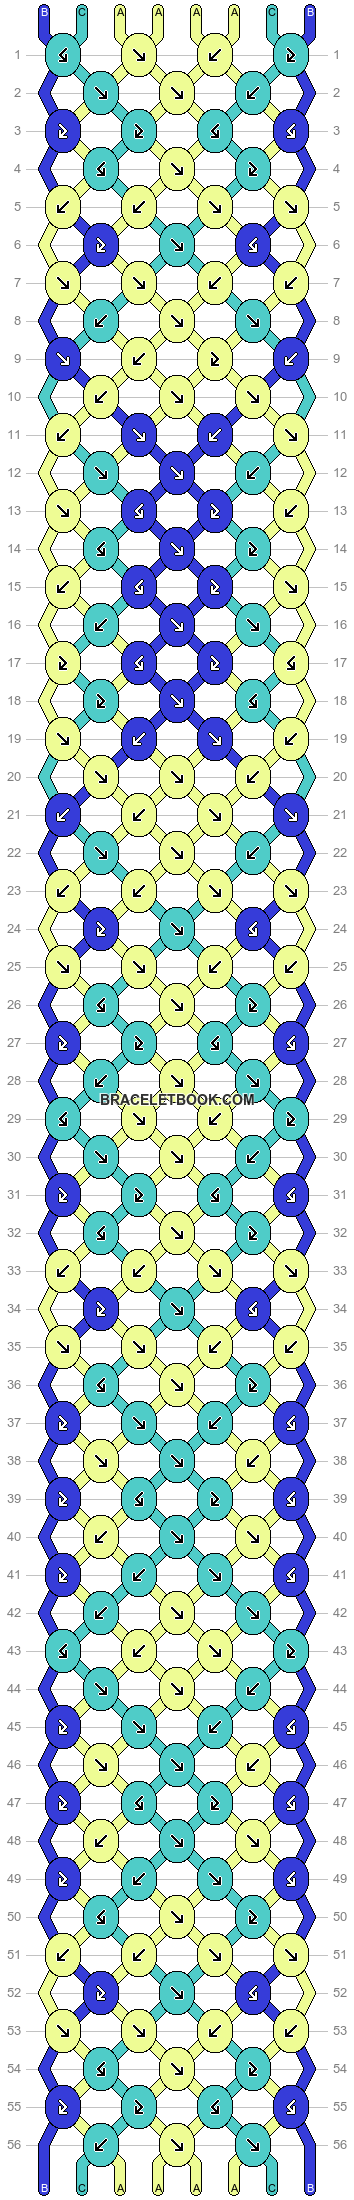 Normal pattern #35885 pattern